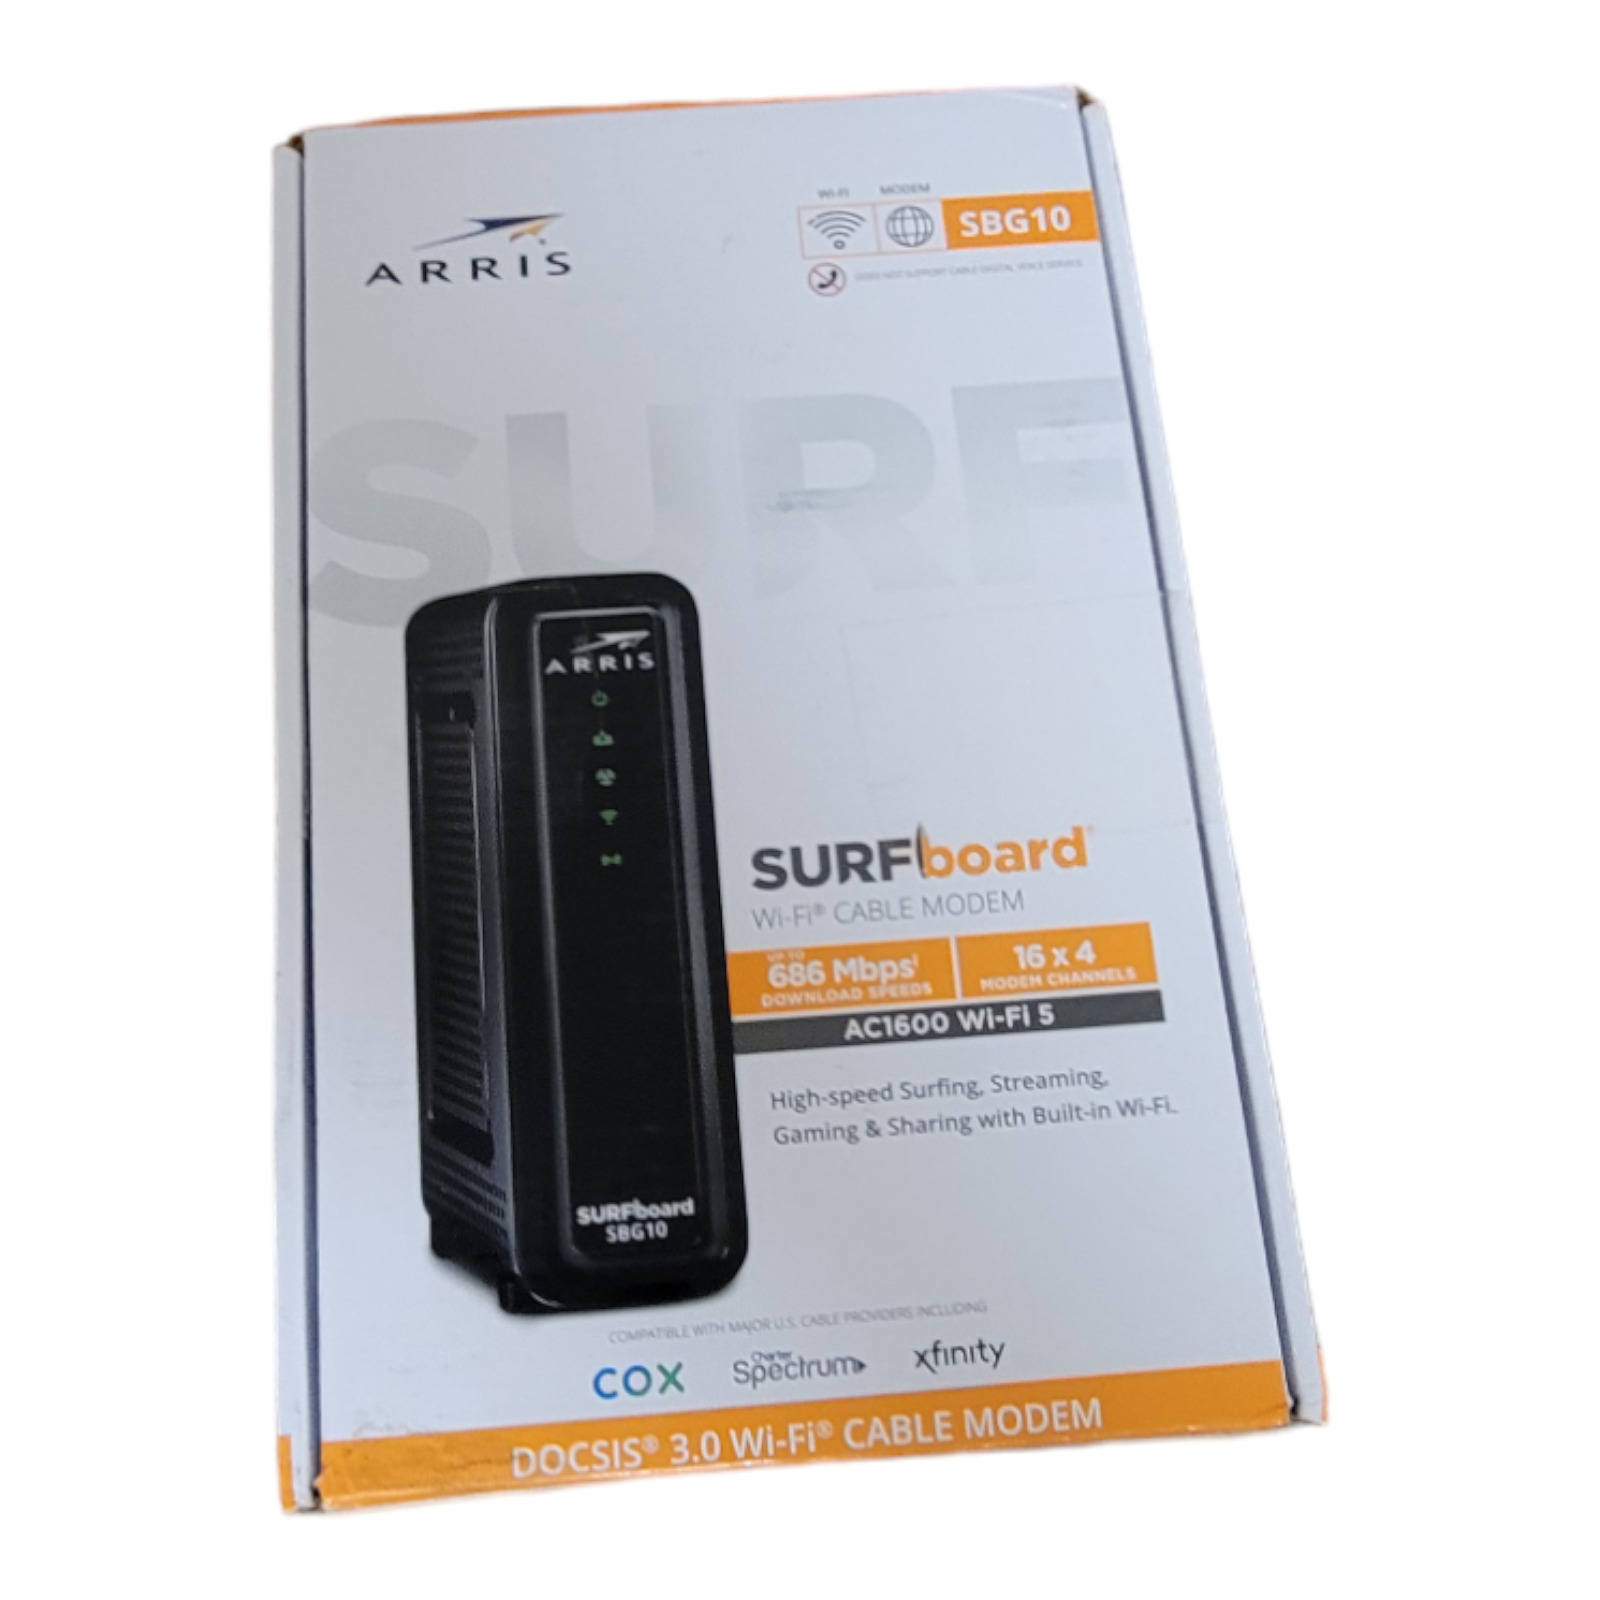 ARRIS SURFboard SBG10 DOCSIS 3.0 16 x 4 Gigabit Cable Modem & AC1600 Wi-Fi 5